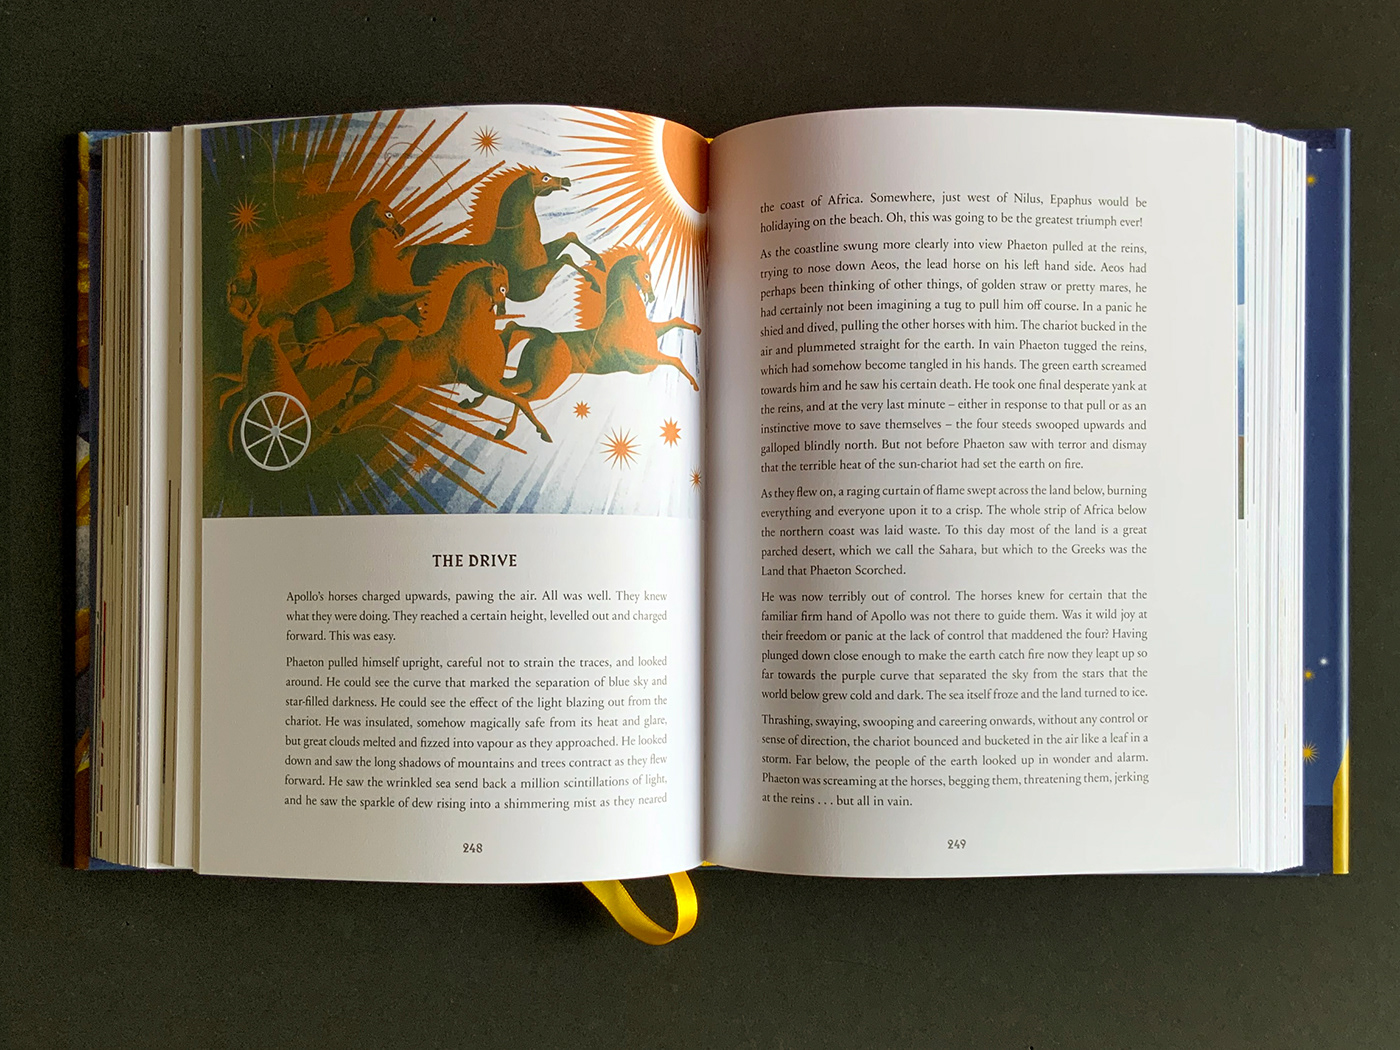 book Illustrated book DigitalIllustration ilustracion mythology greekmythology goddess Digital Art  mythos StephenFry